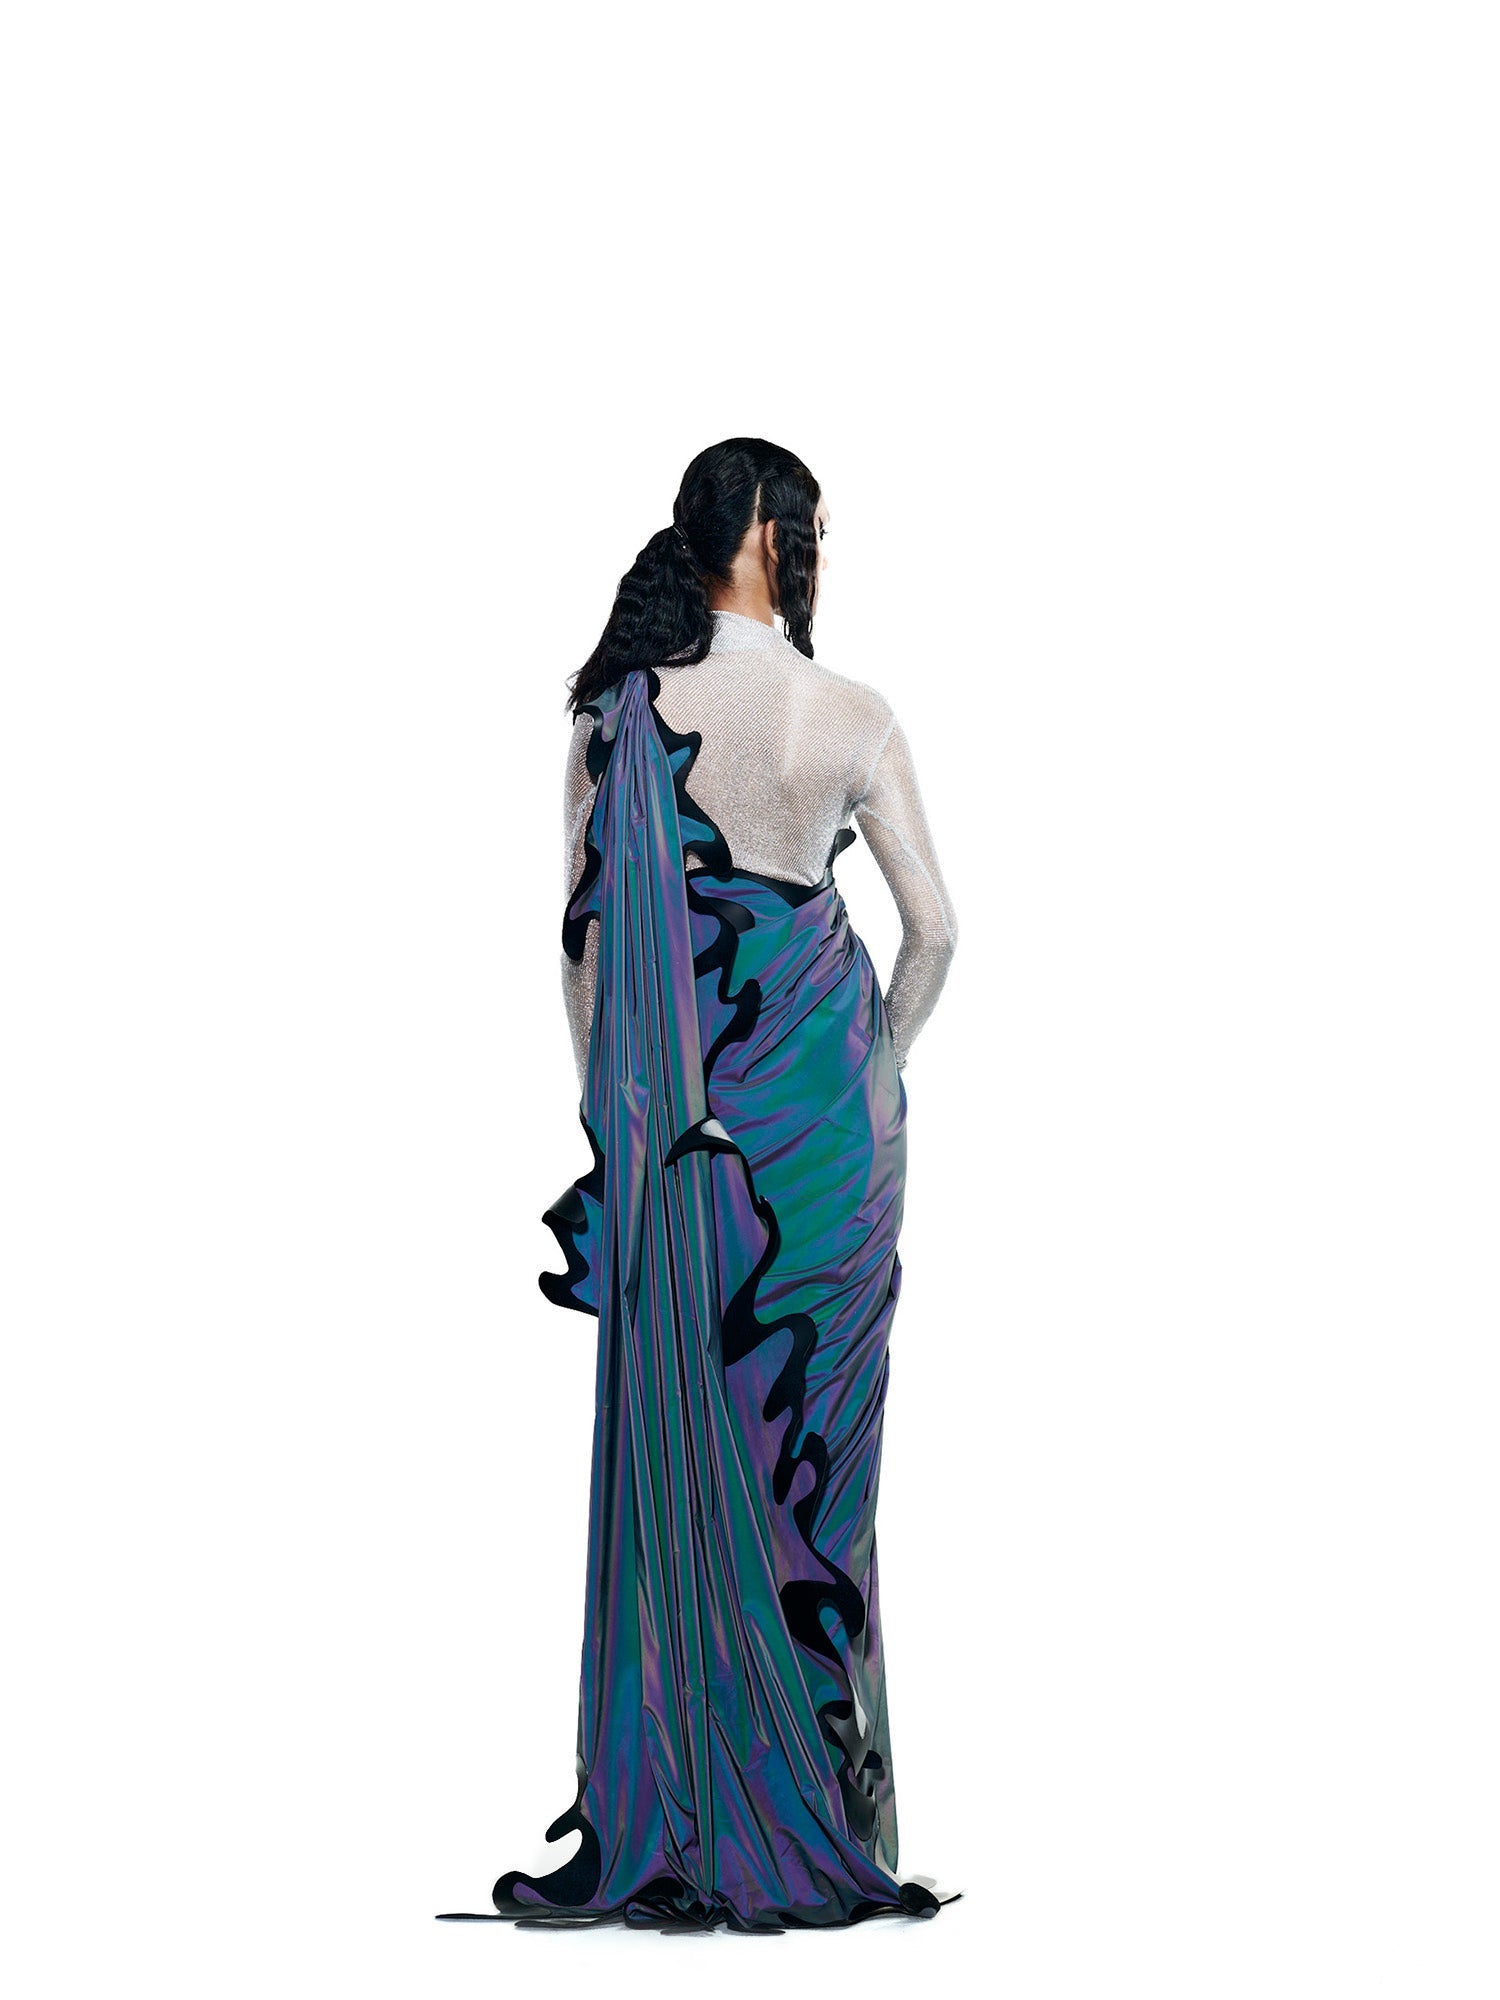 Reflective sari with liquid design